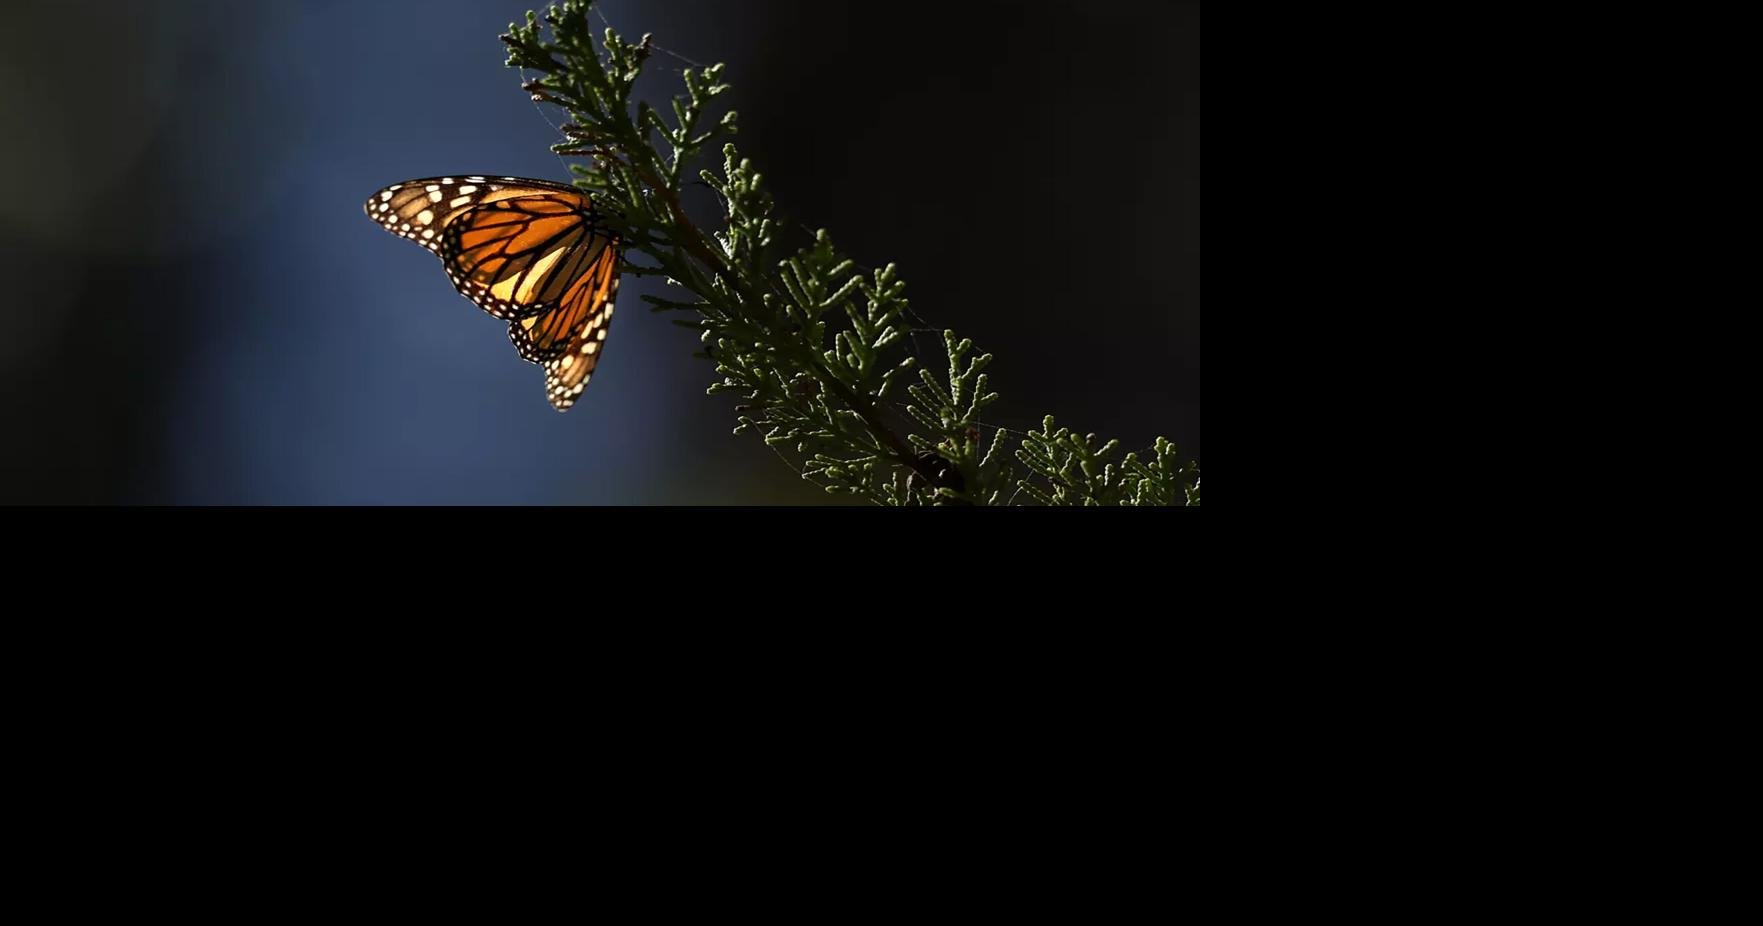 Ventura County residents to get milkweed for monarchs